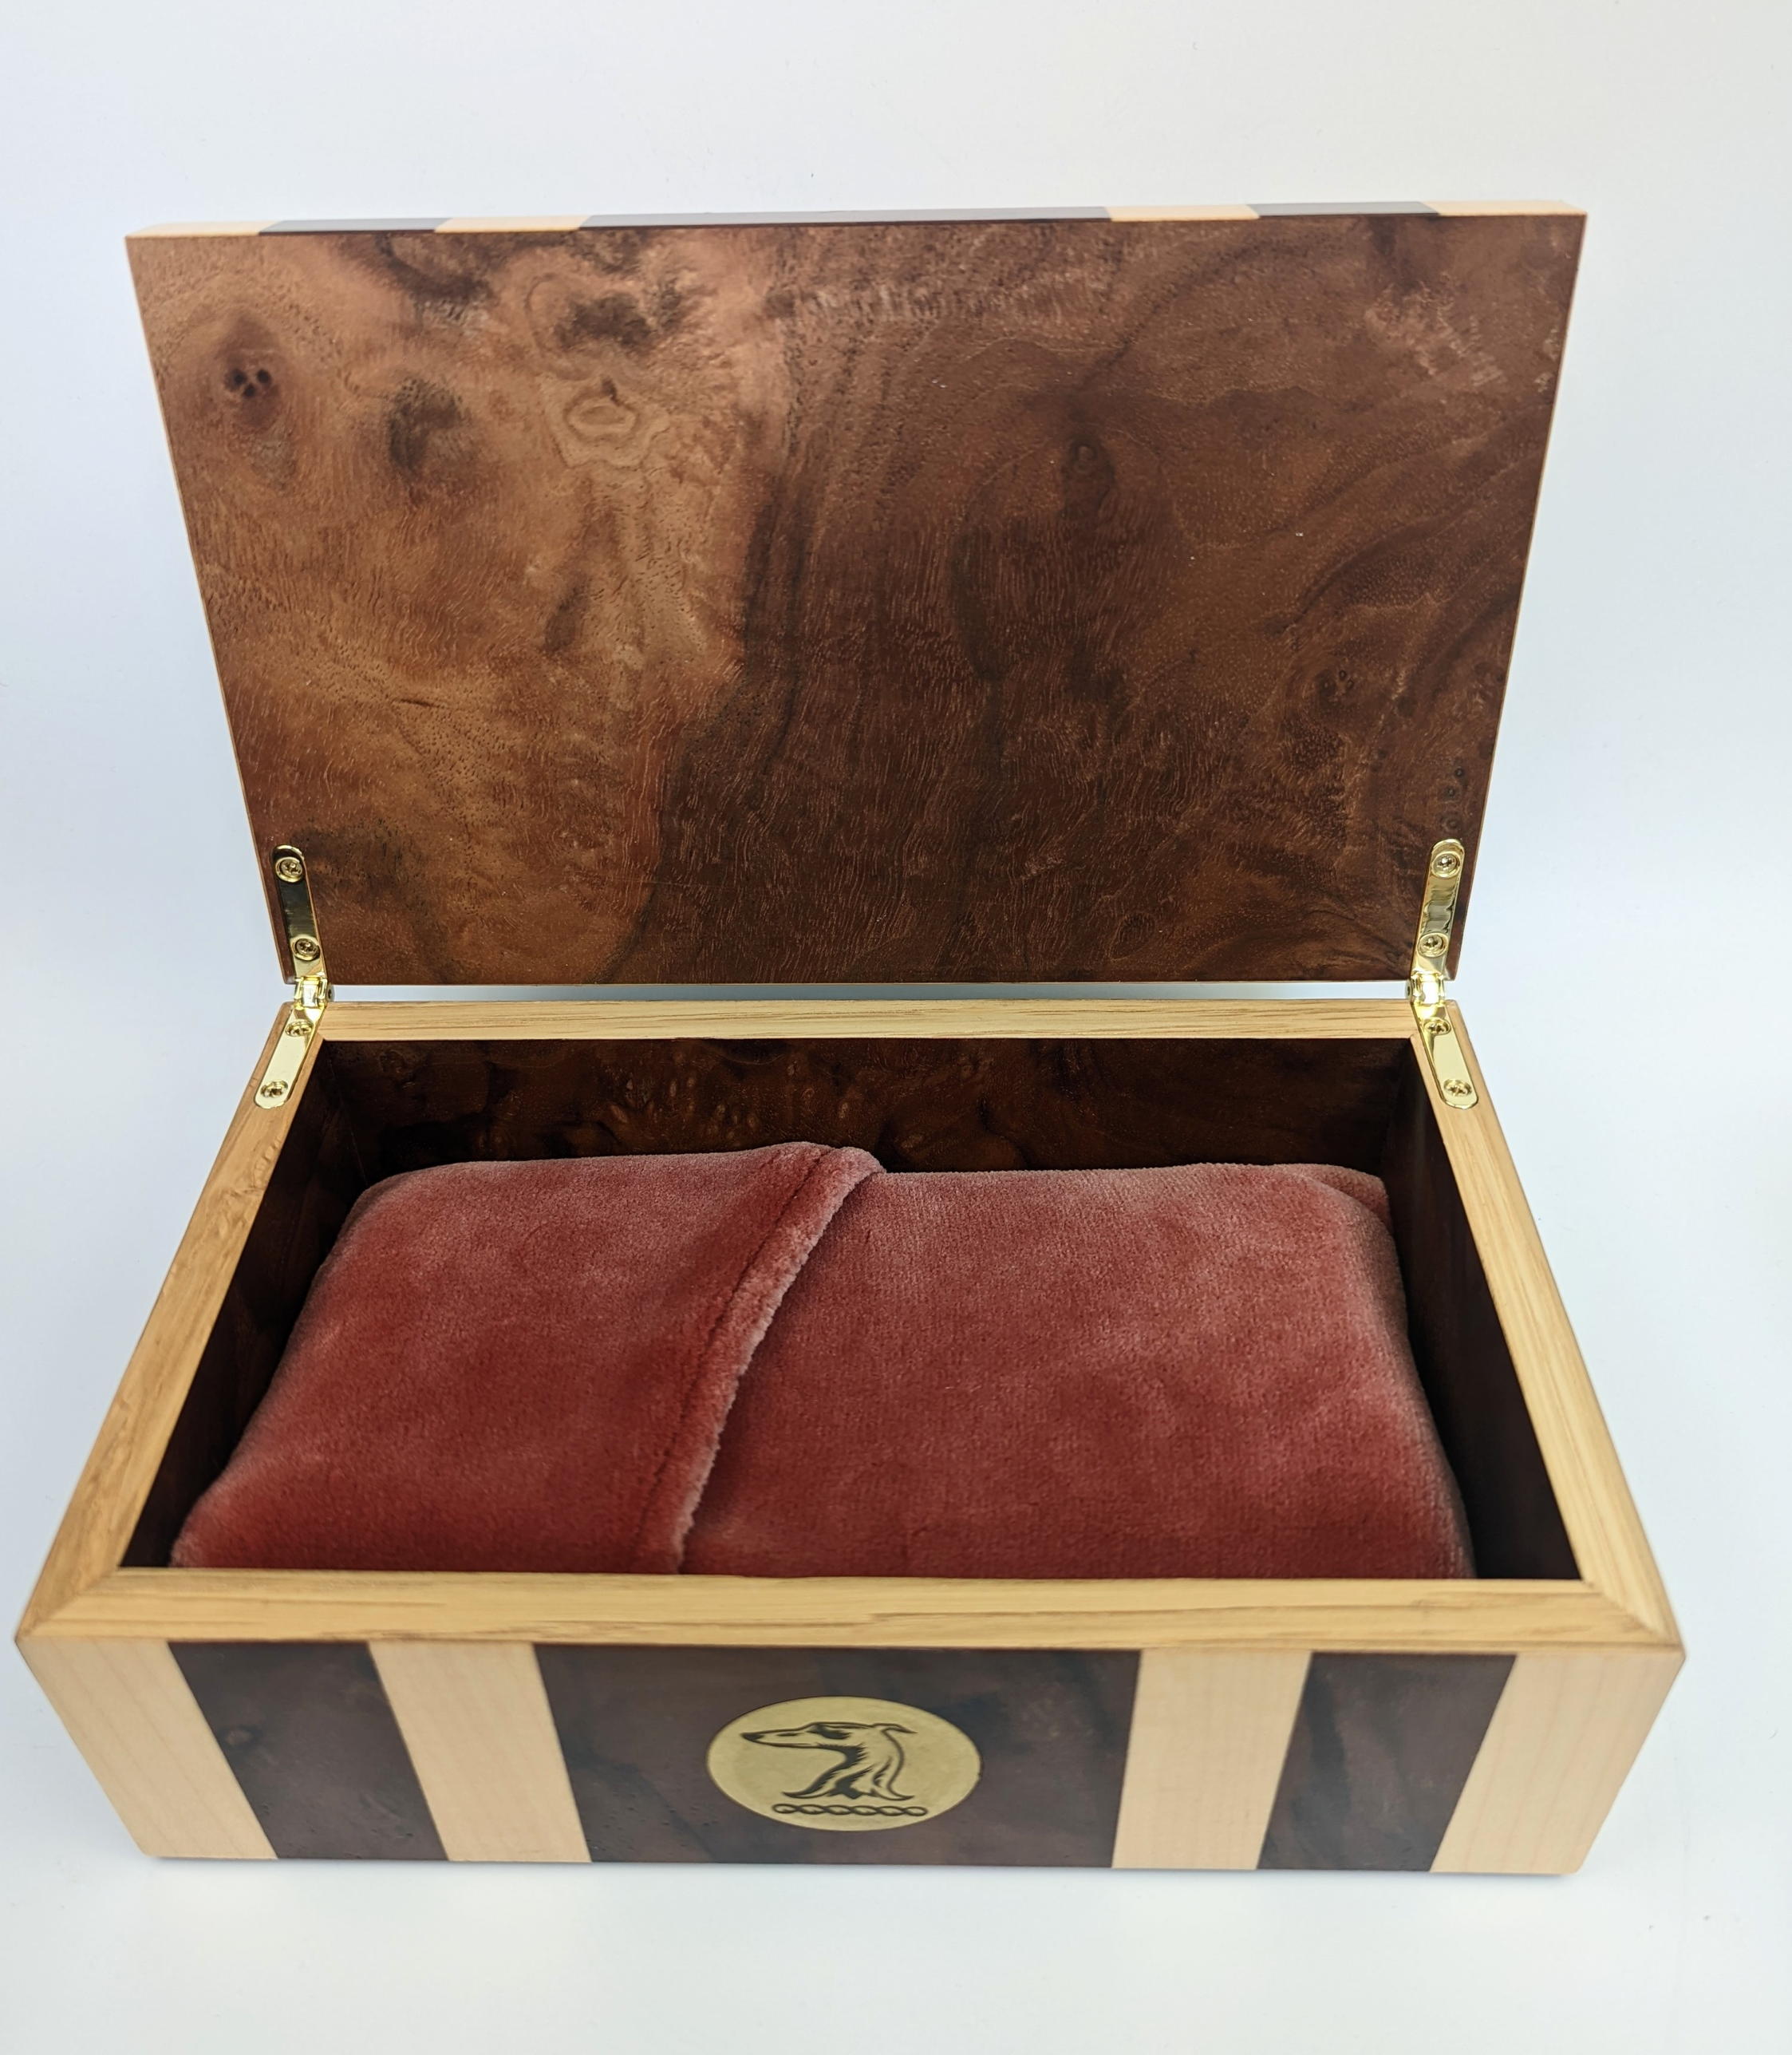 A Connaught (Hotel) cigar exchange box, Deco style with burr walnut veneer, H.7cm L.20cm D.12cm - Image 4 of 5